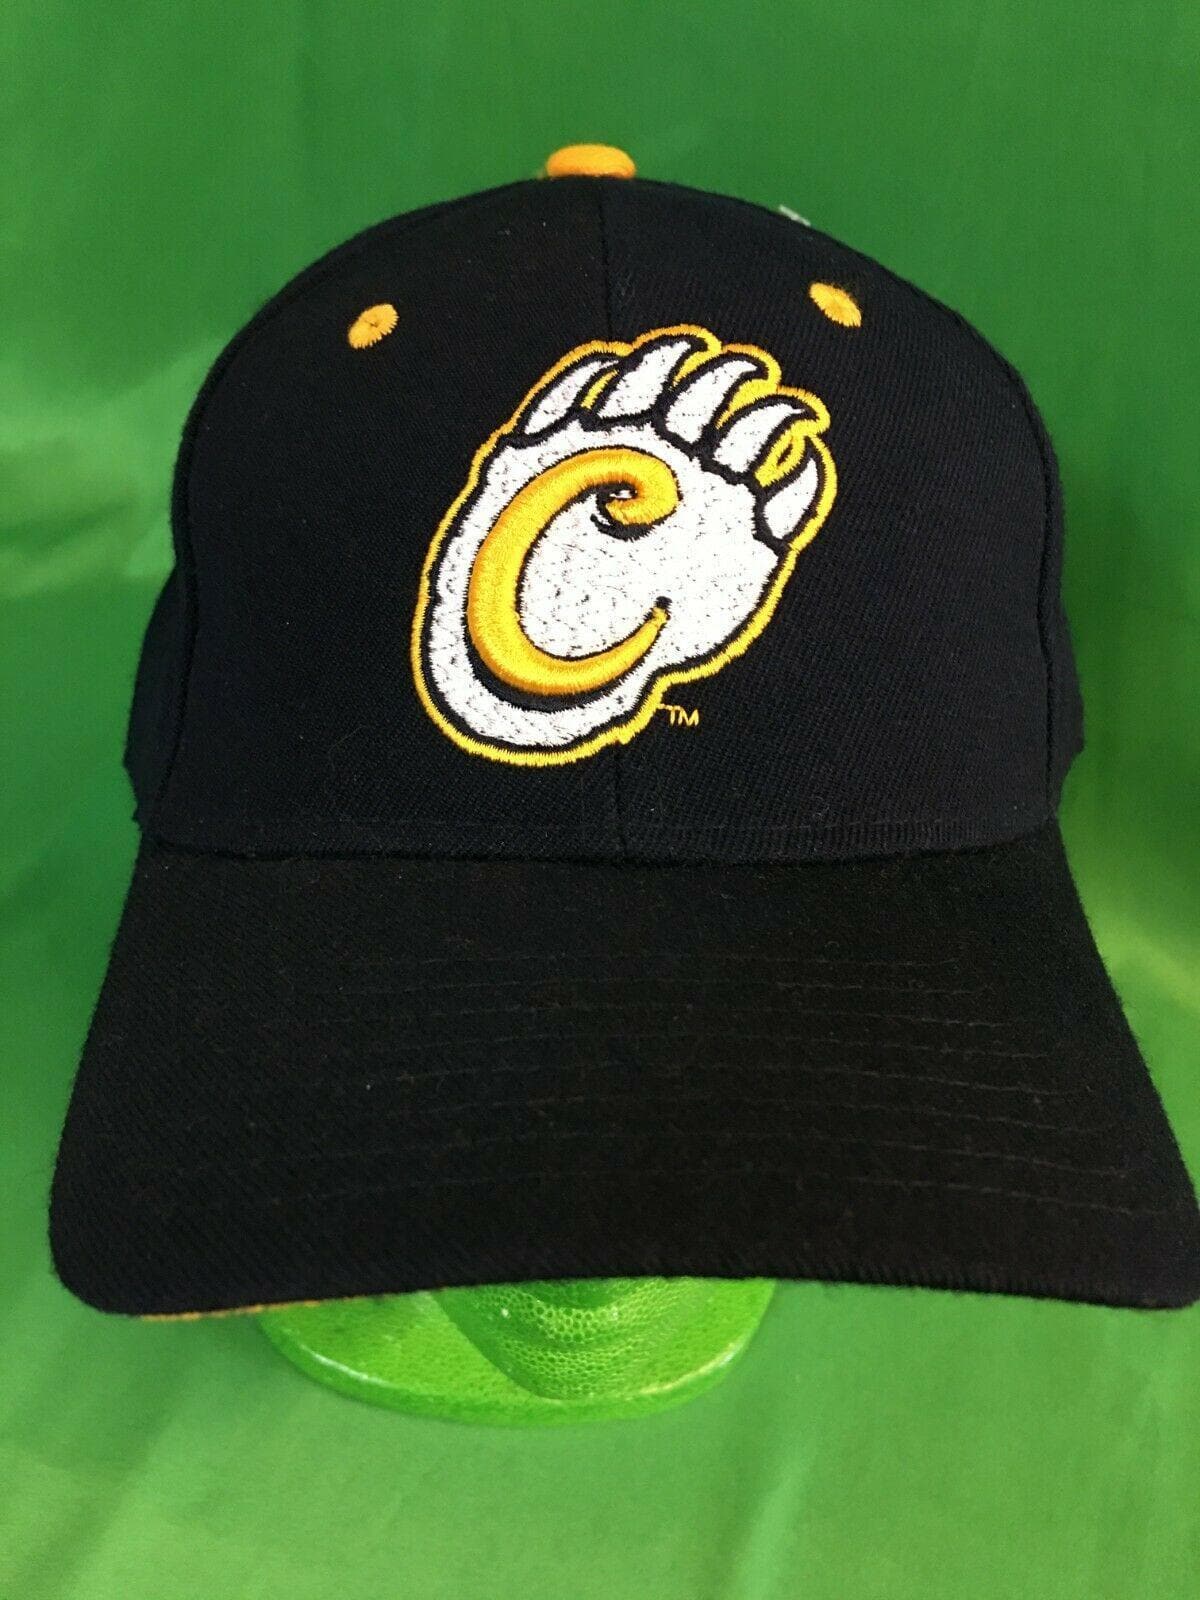 NCAA California Golden Bears Zephyr Black Hat/Cap 7-1/2 NWT